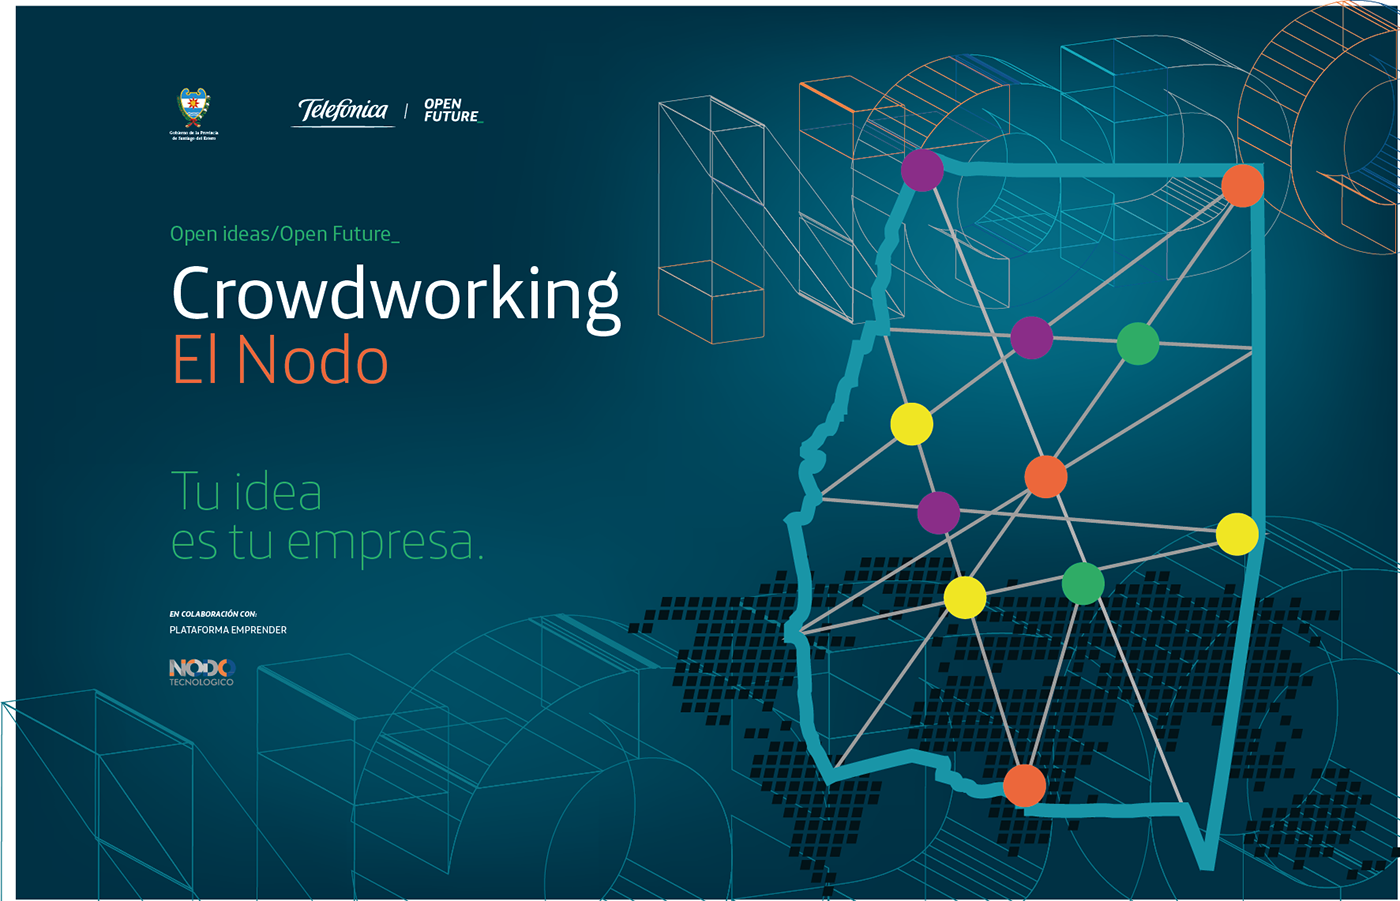 crowdworking entrepreneurship   open innovation innovation Technology brand identity startups Telefonica telefonica open future